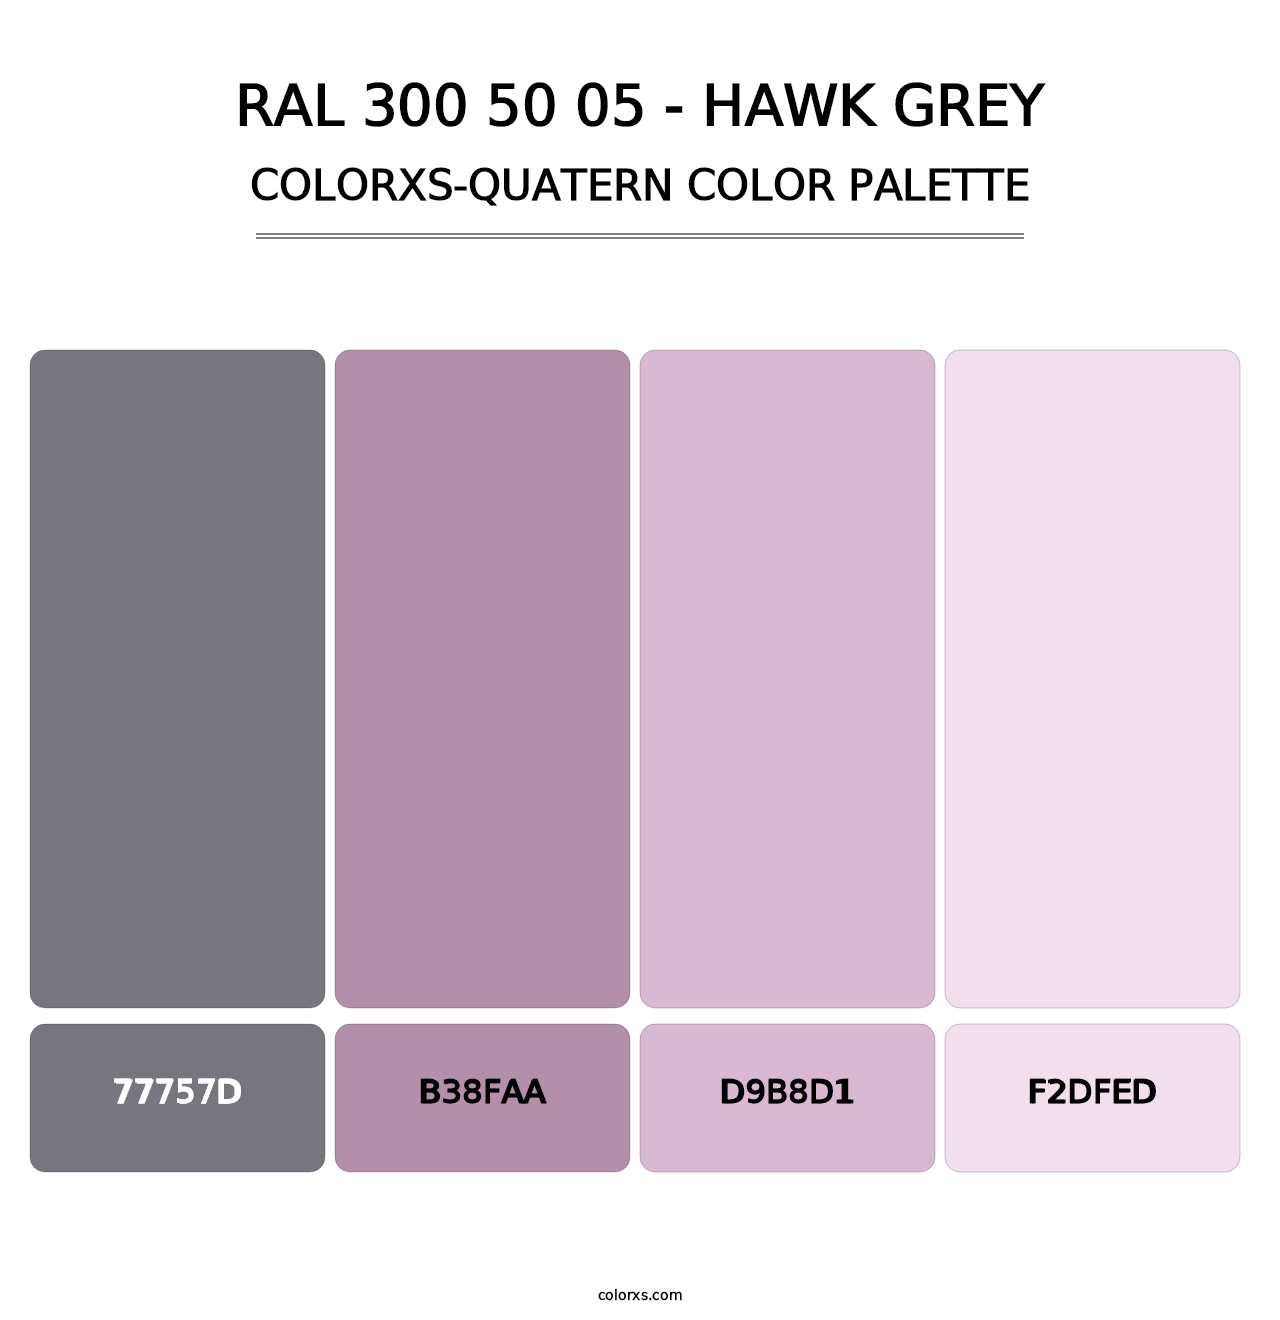 RAL 300 50 05 - Hawk Grey - Colorxs Quatern Palette